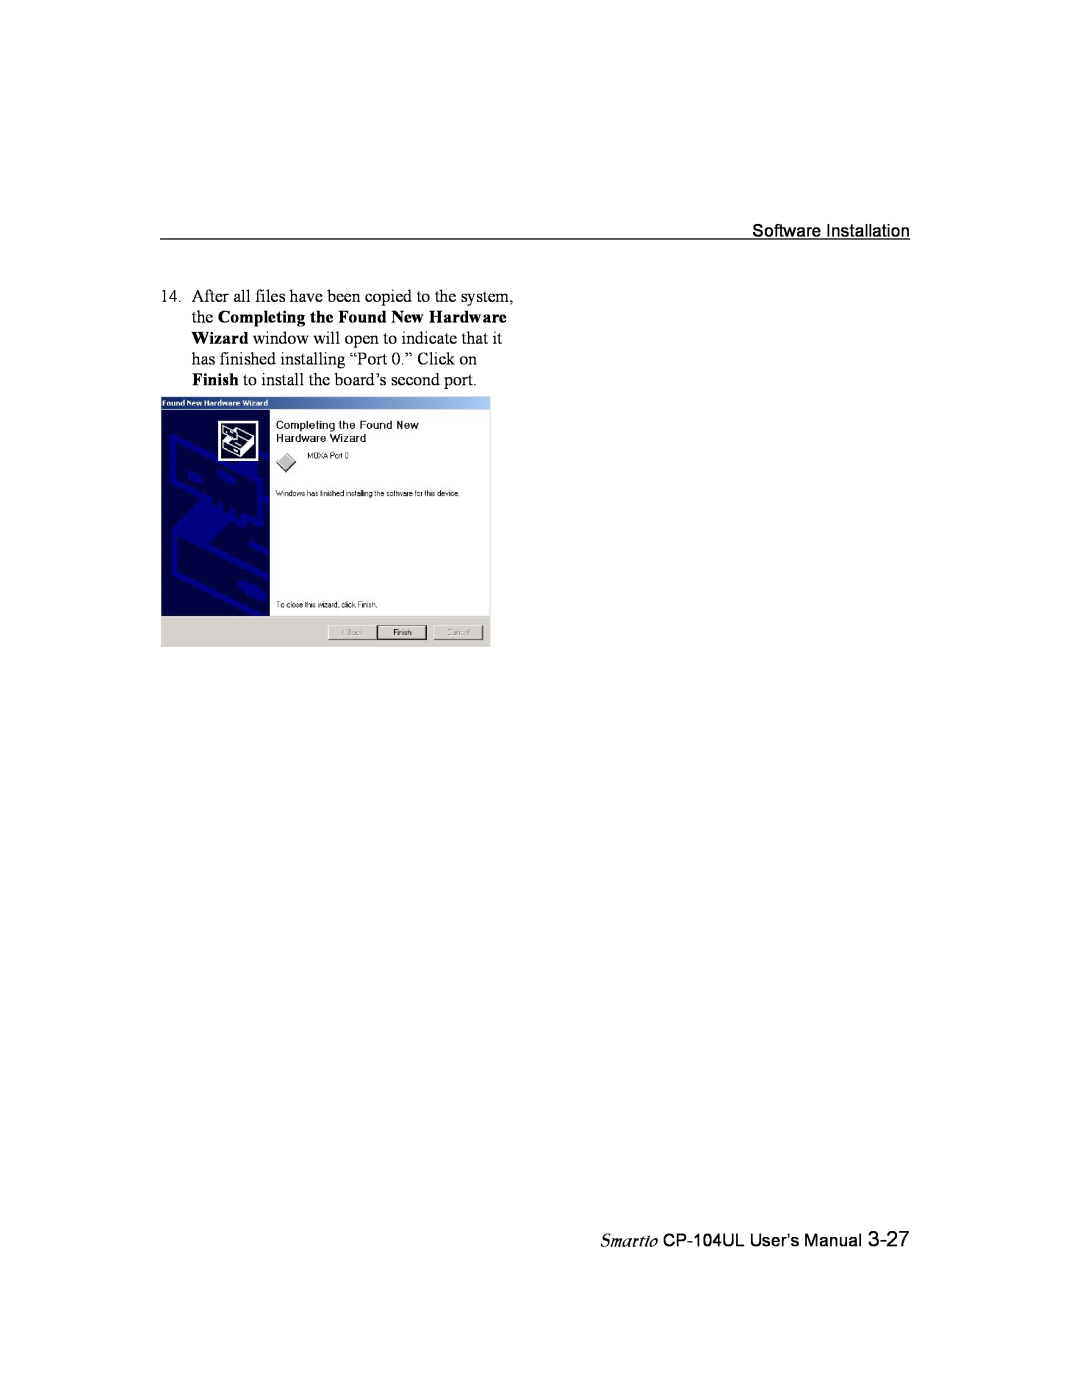 Moxa Technologies user manual Software Installation, Smartio CP-104UL User’s Manual 